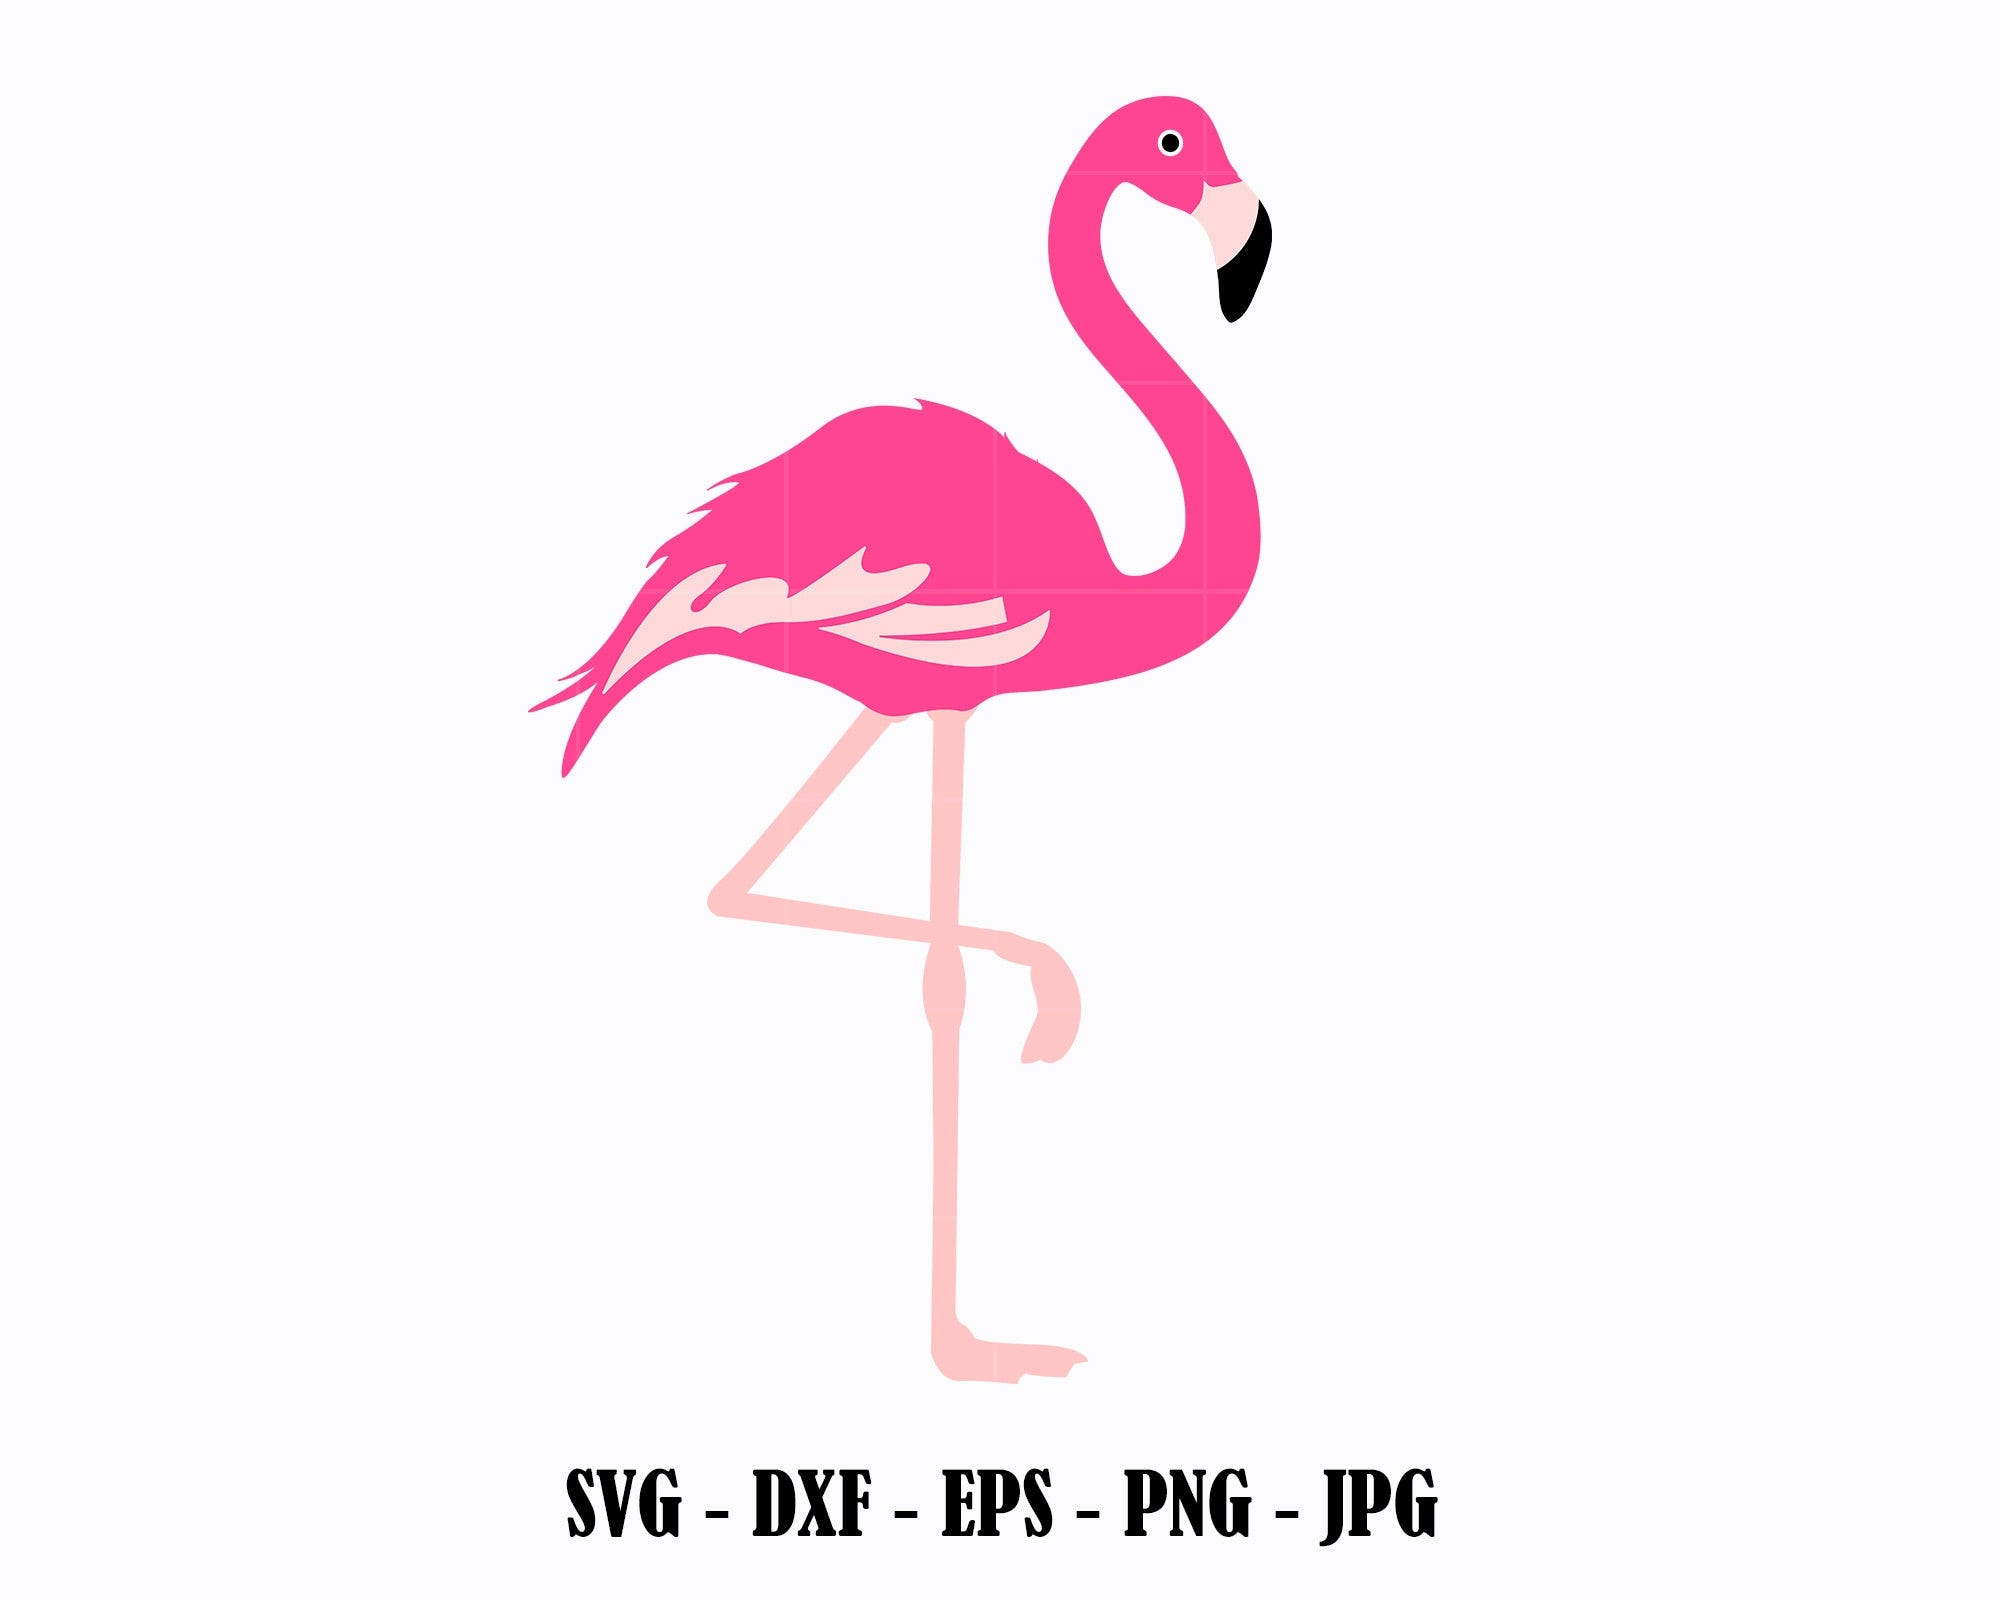 Flamingo SVG Pink Flamingo Svg Files Flamingo Circut Cut Files Dxf Png Eps Jpg Instant Download